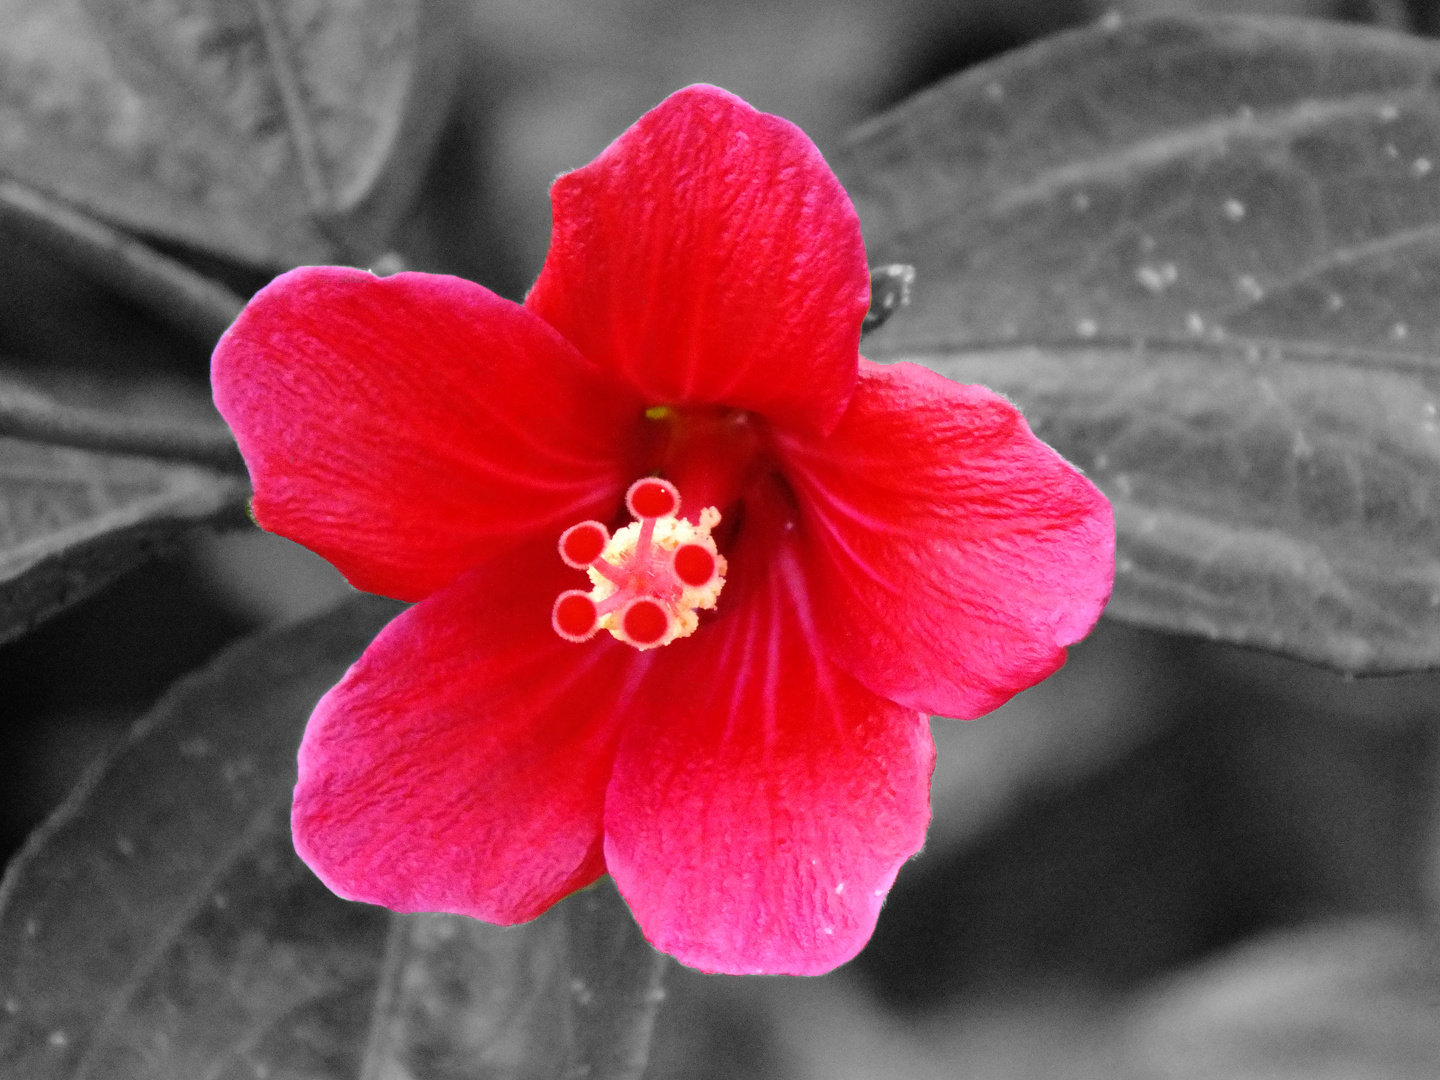 Red blossom